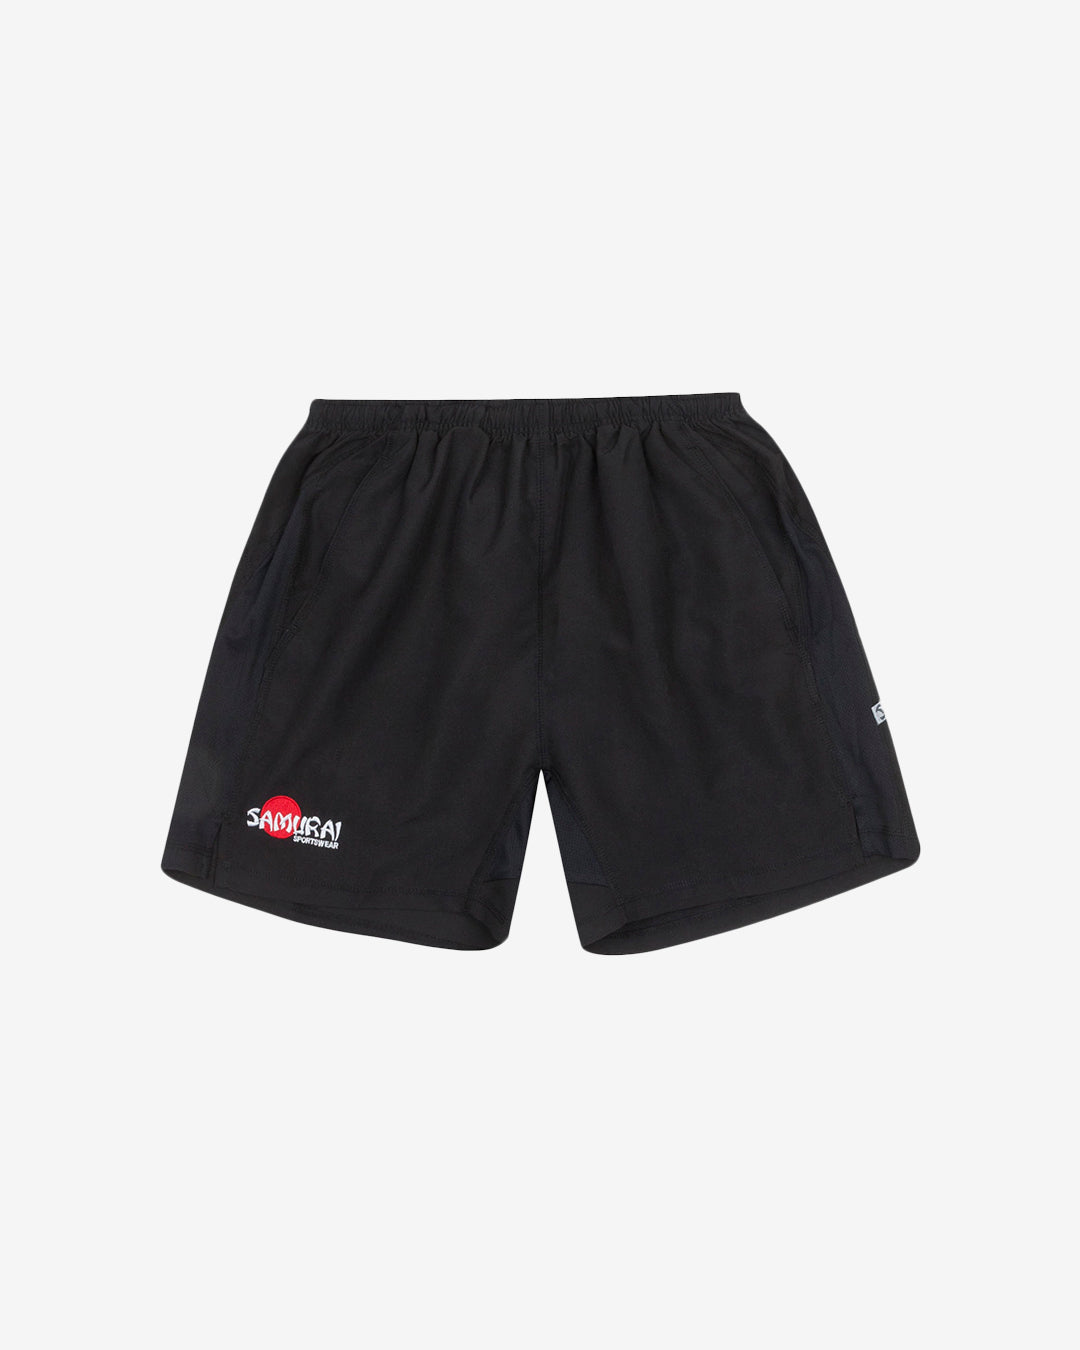 Hc: 9606 - Clipper Shorts - Black